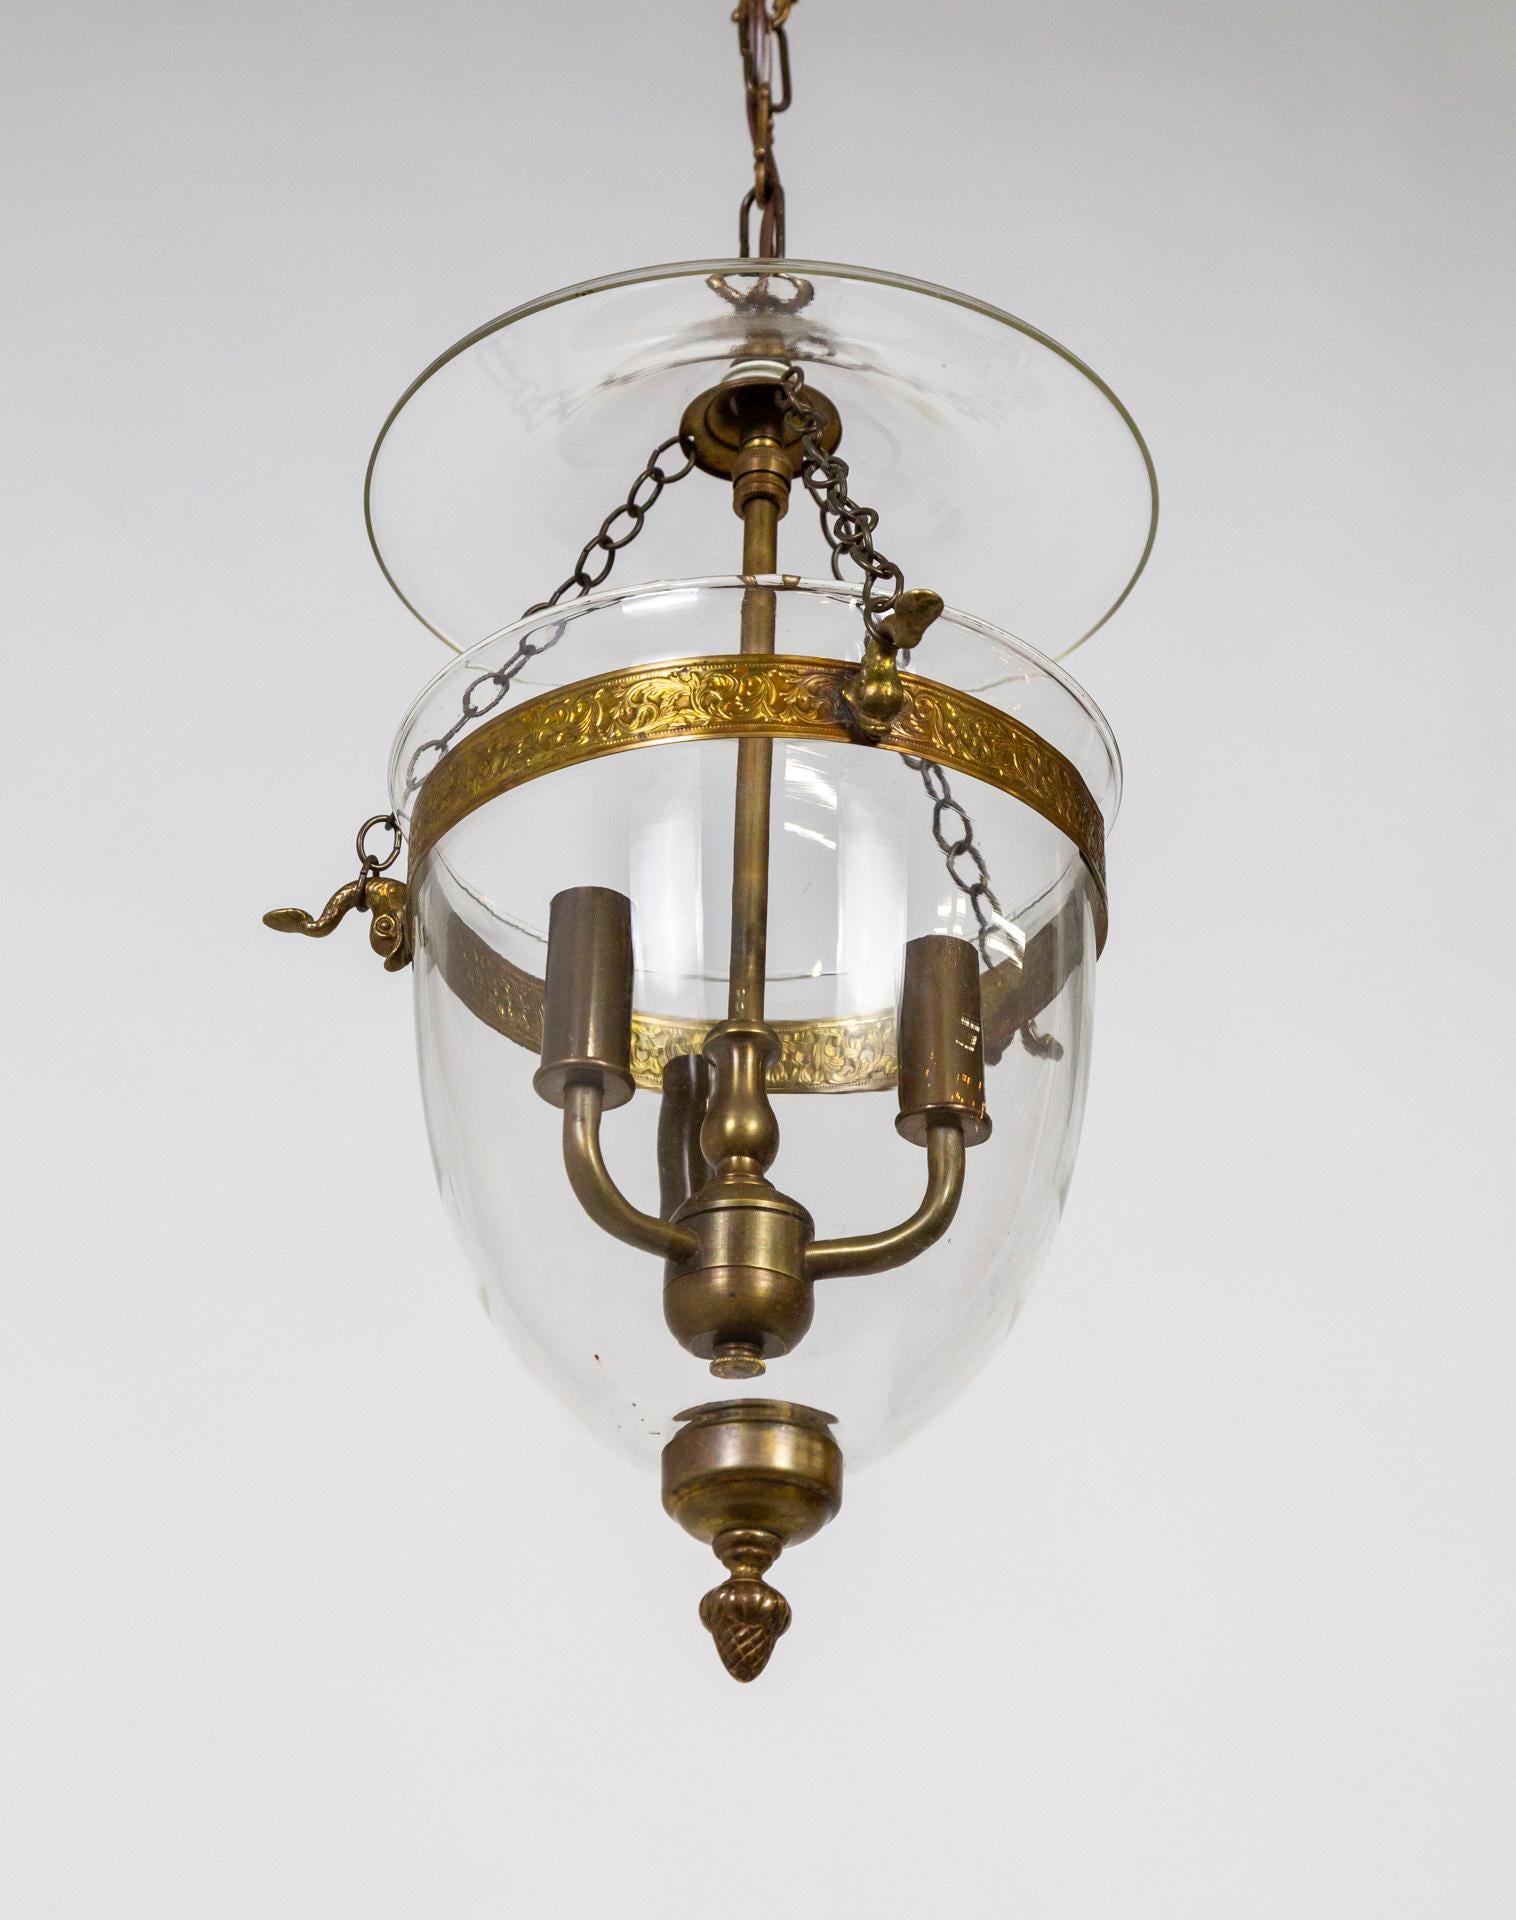 Contemporary Petite Classic Bell Jar Lantern w/ Acanthus Leaves Trim